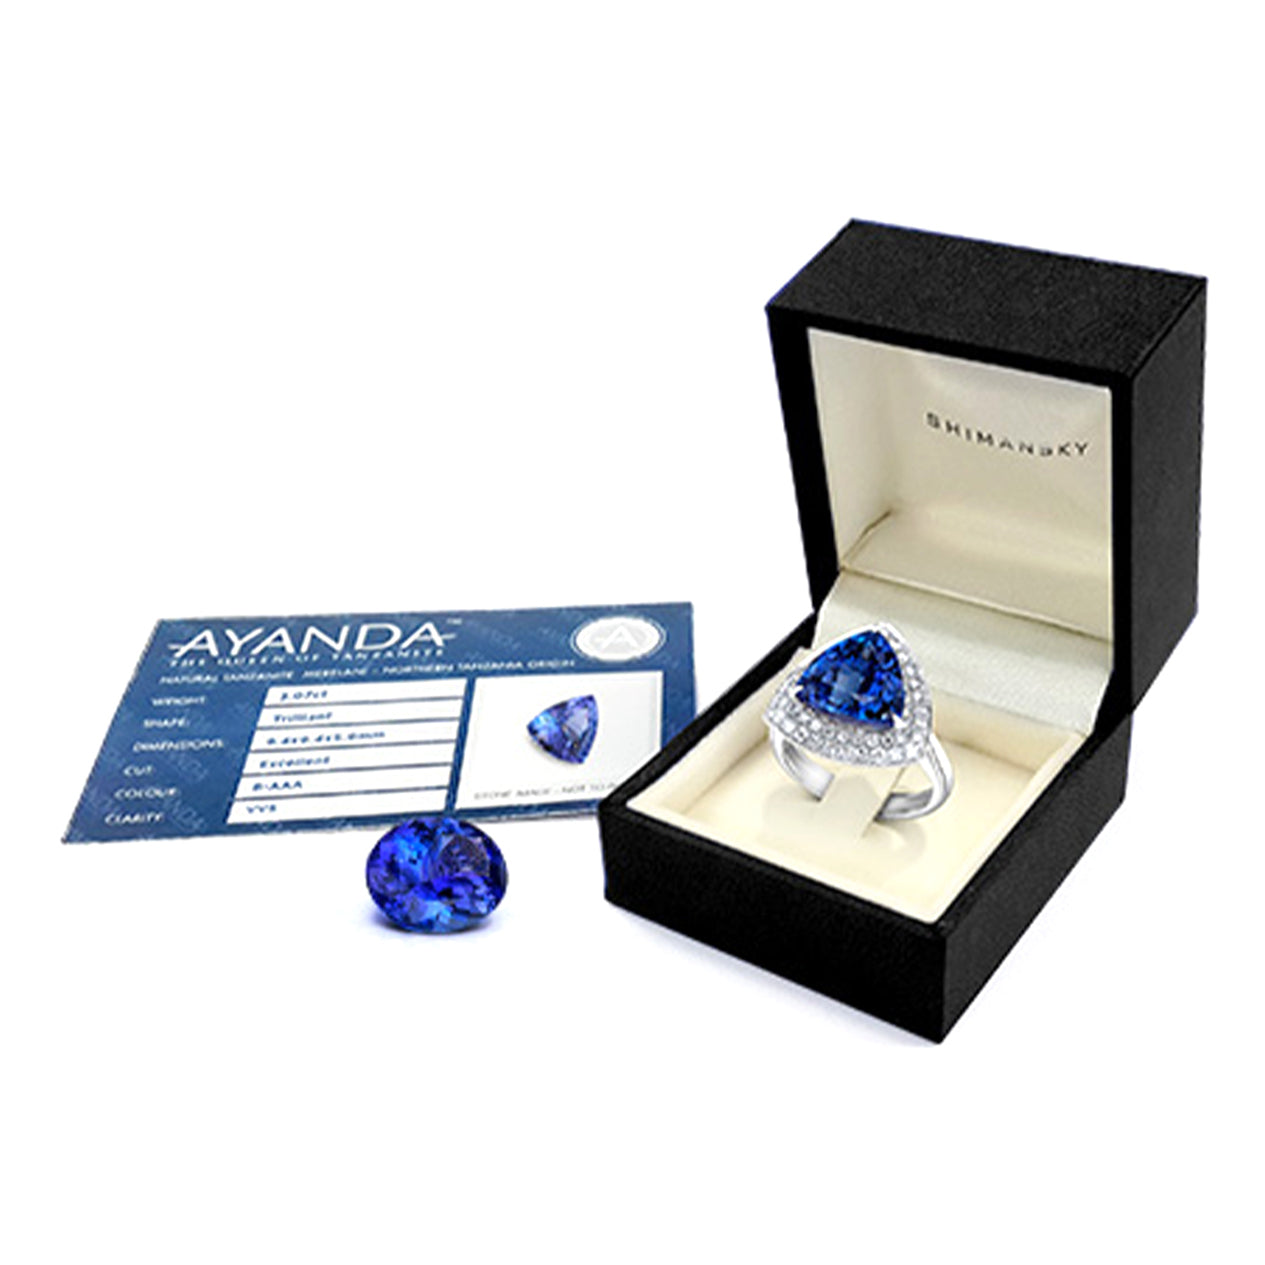 Shimansky Ayanda Tanzanite and Diamond Engagement Ring in Box with Certificate